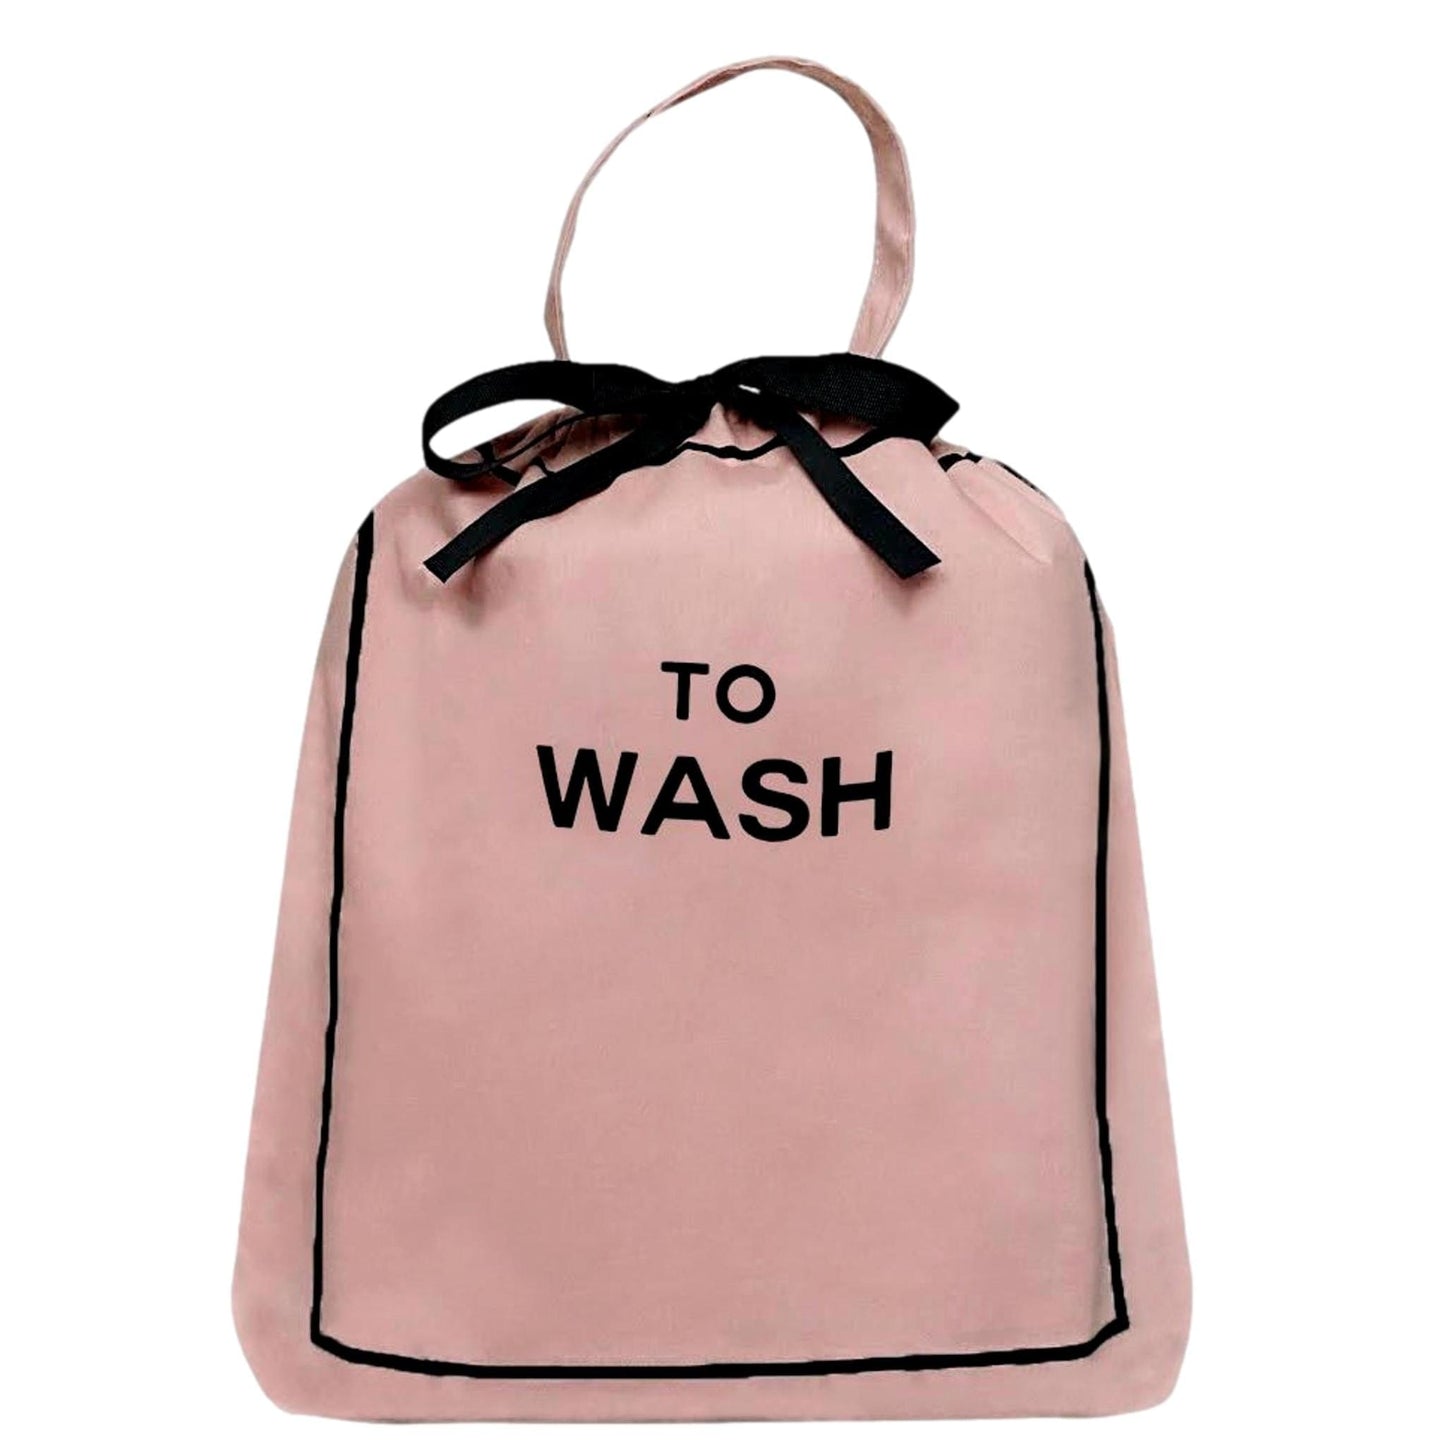 Wash Me, Laundry Bag, Pink/Blush